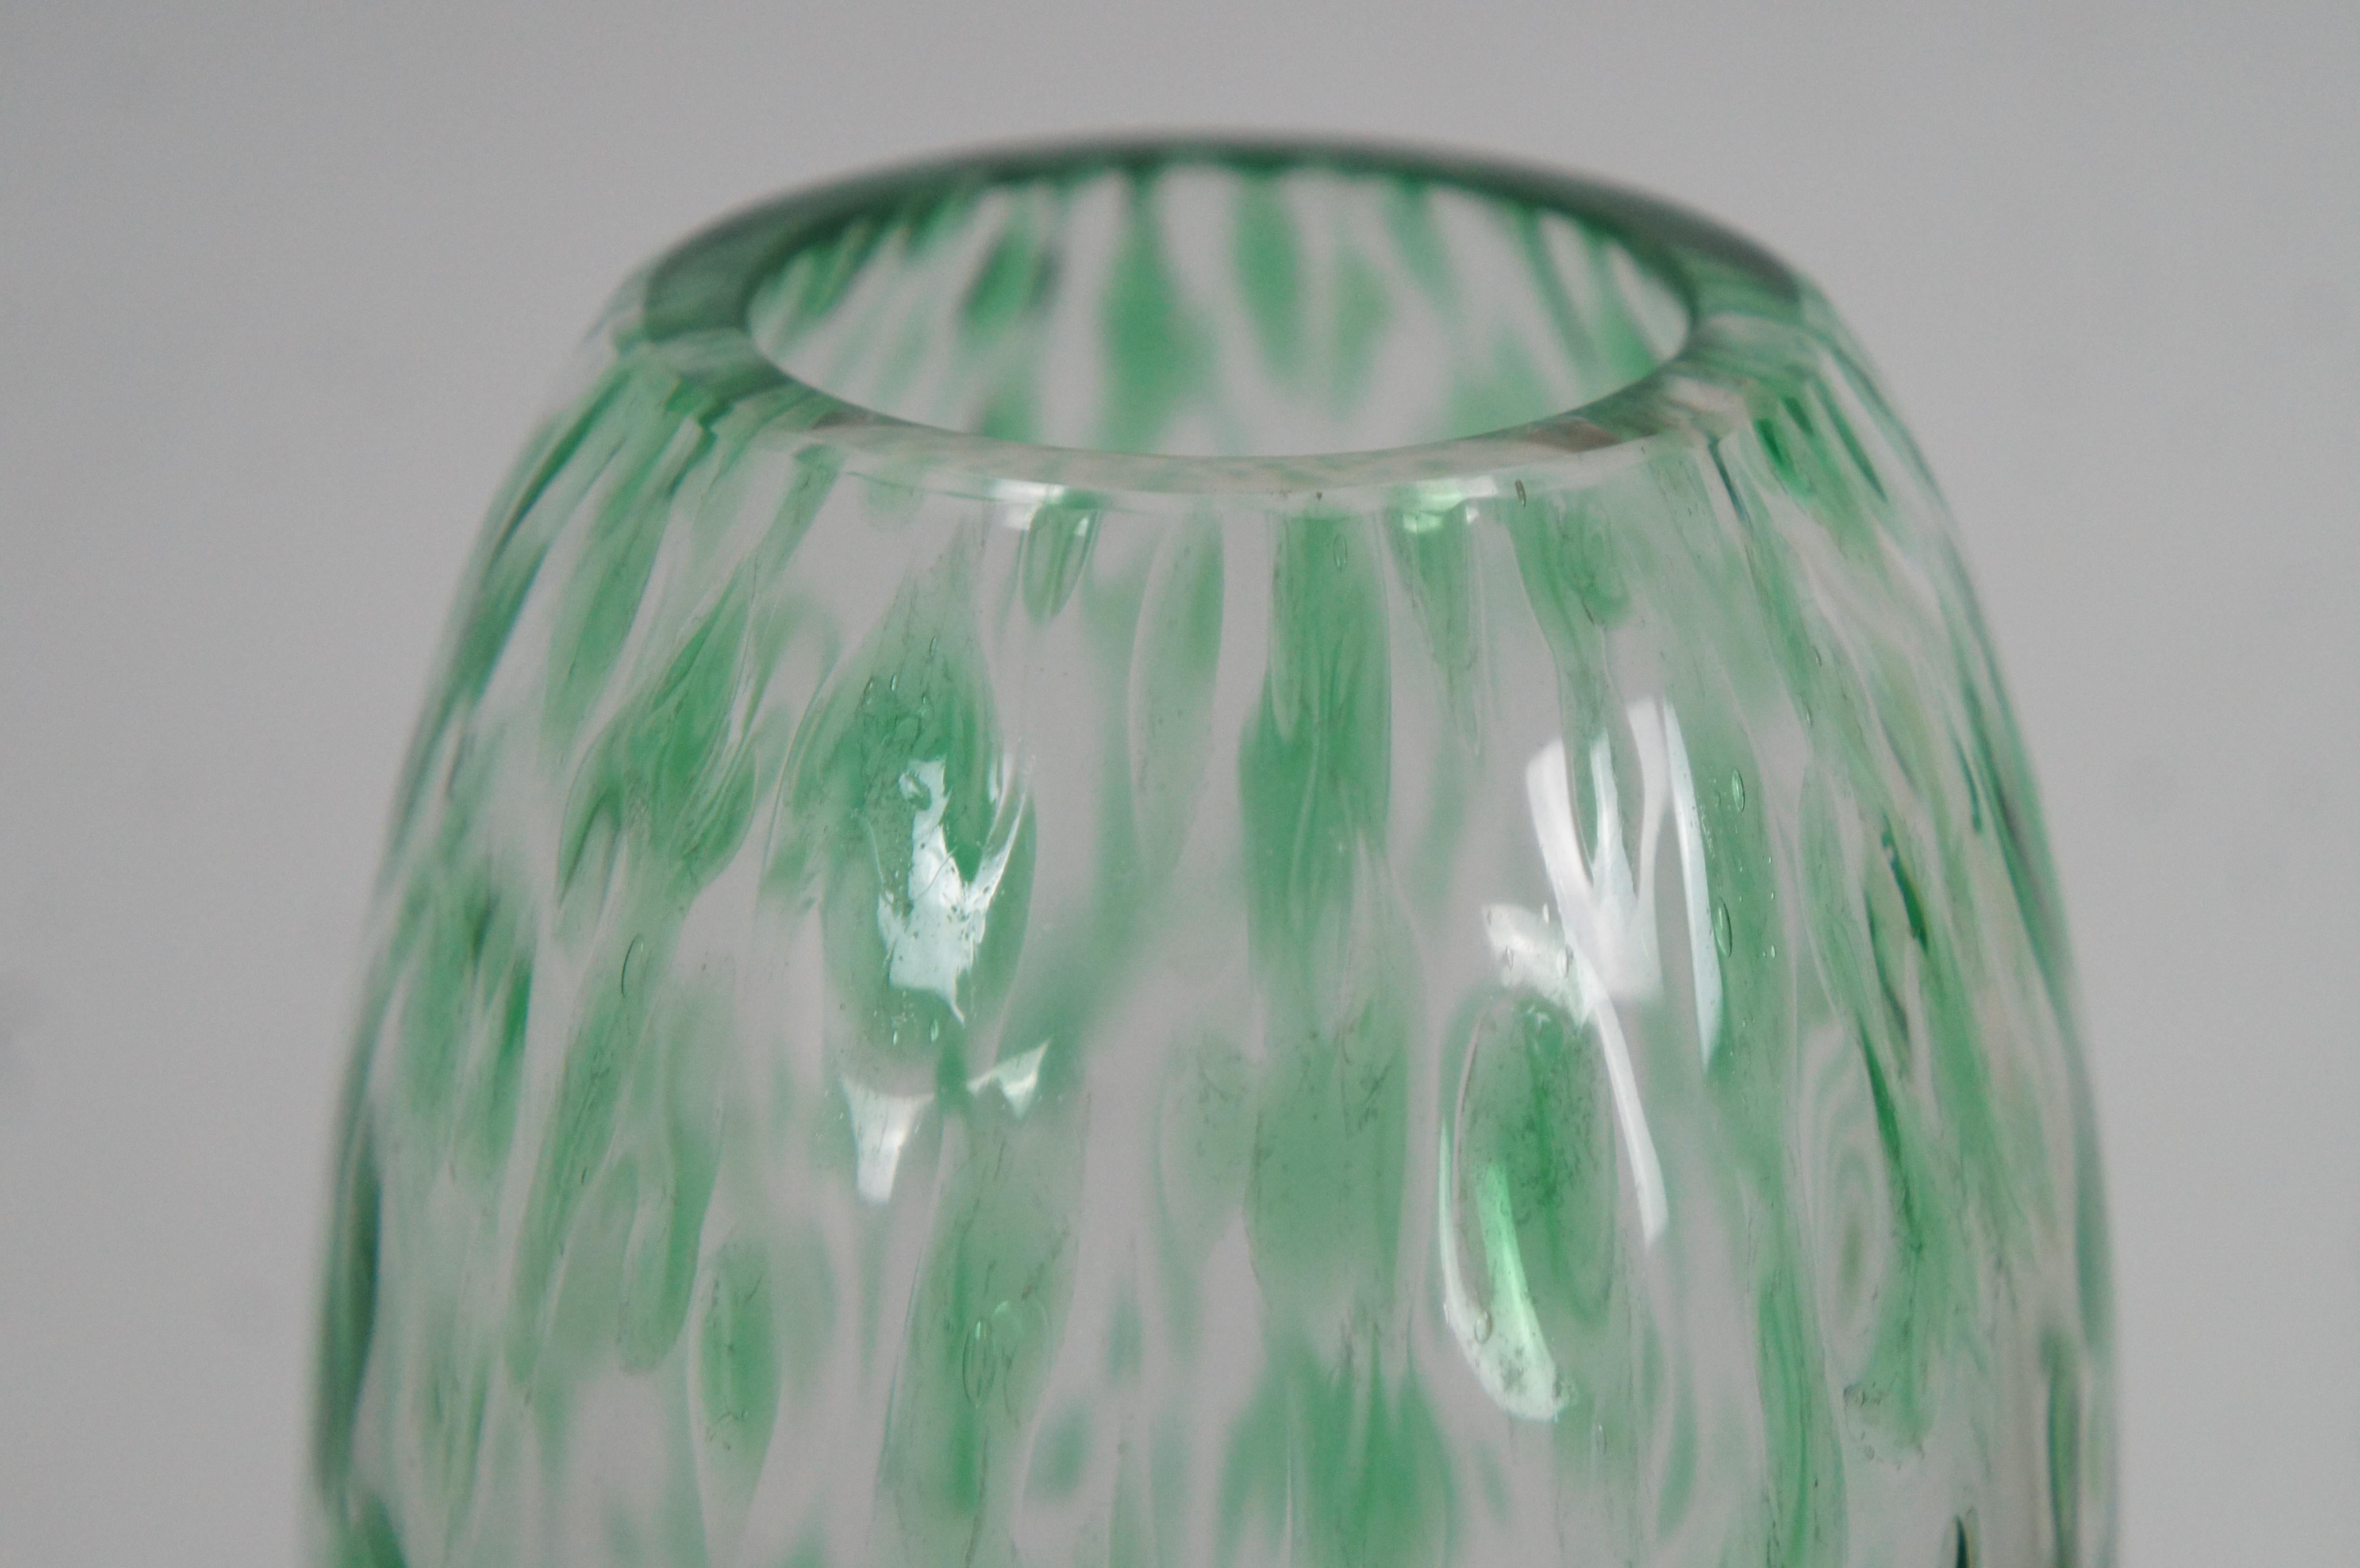 Hand Blown Mid Century Modern Atomic Green &Yellow Studio Art Glass Bud Vase 16